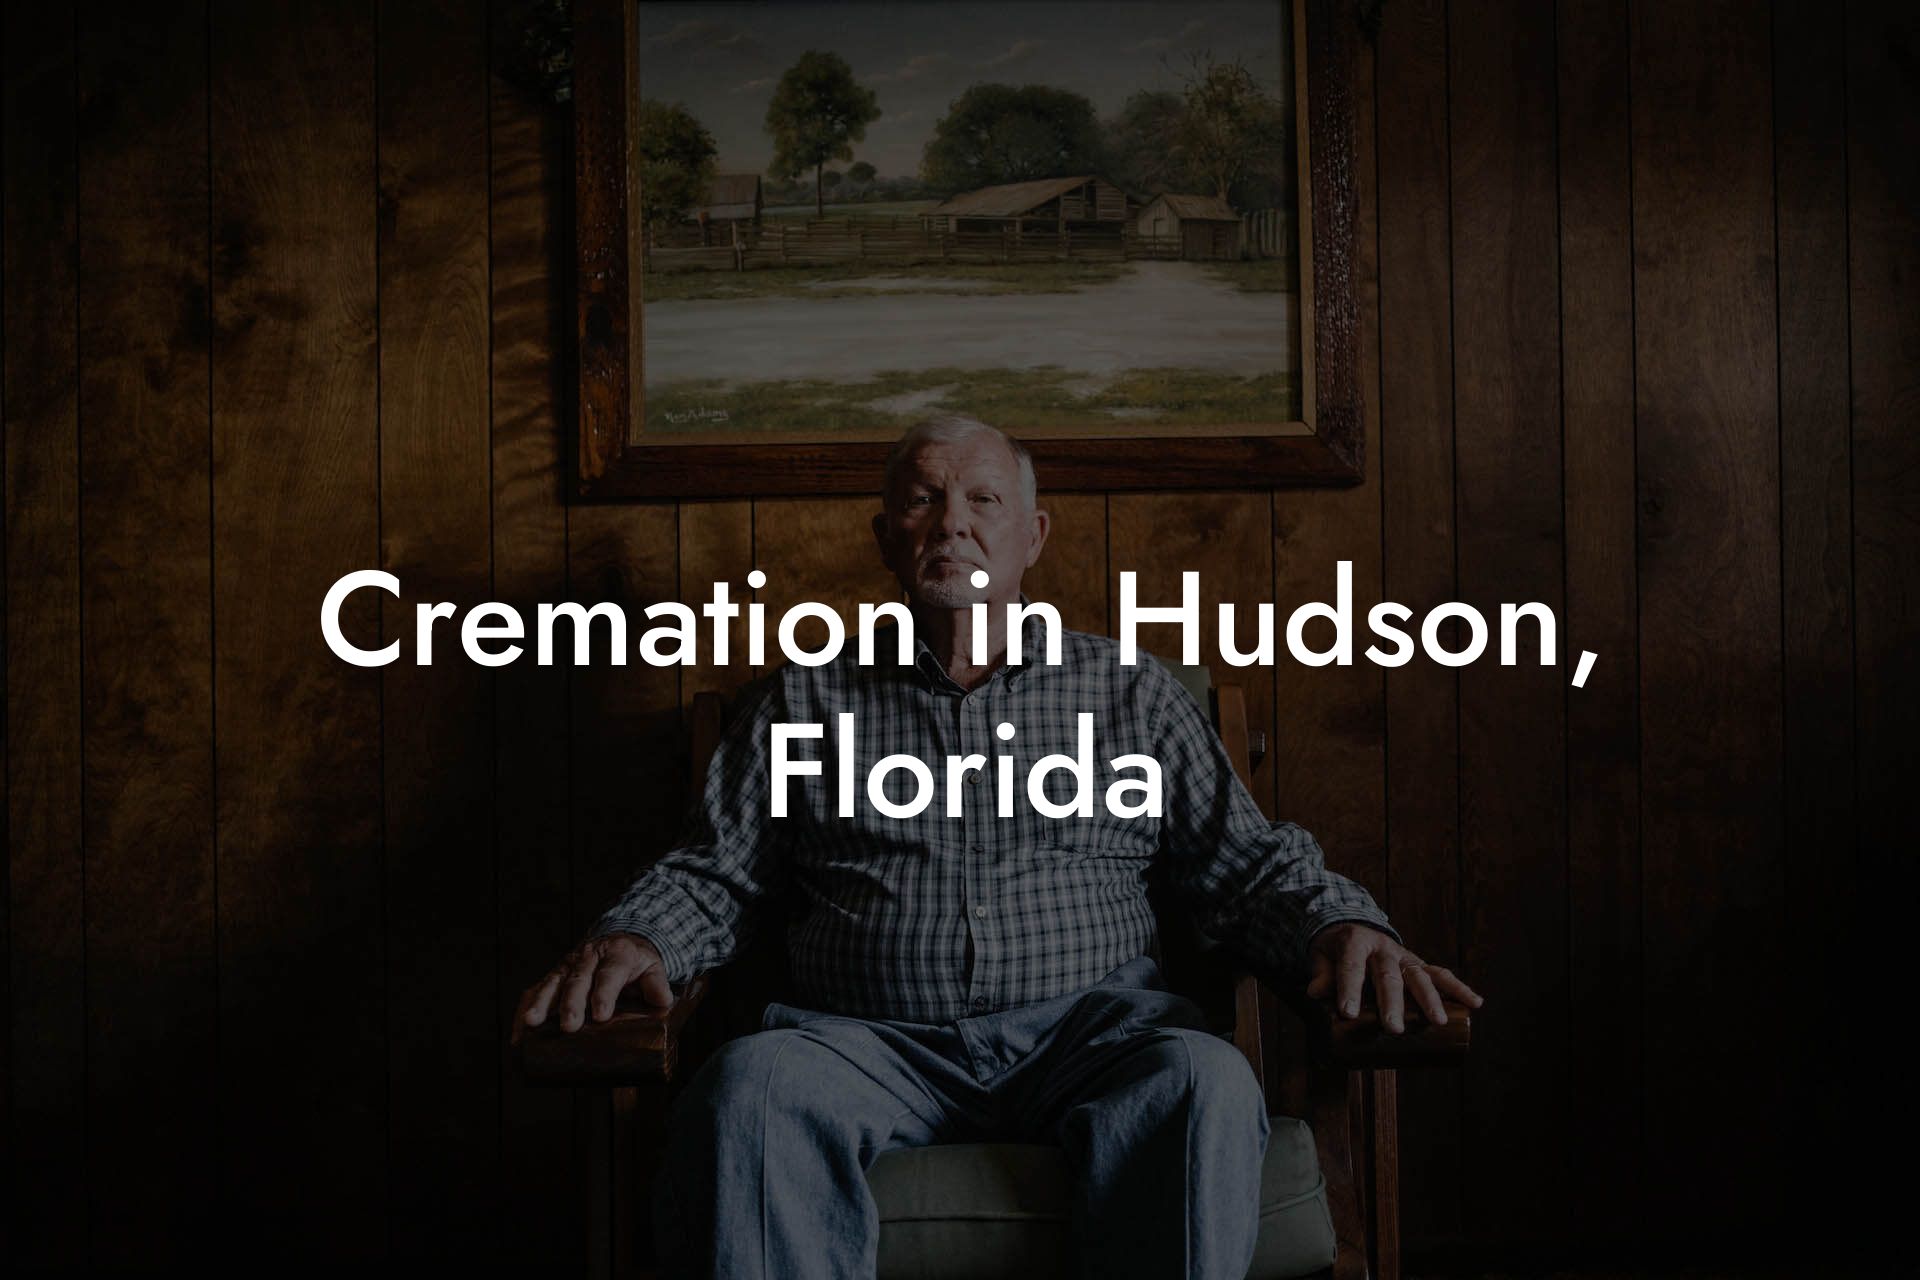 Cremation in Hudson, Florida